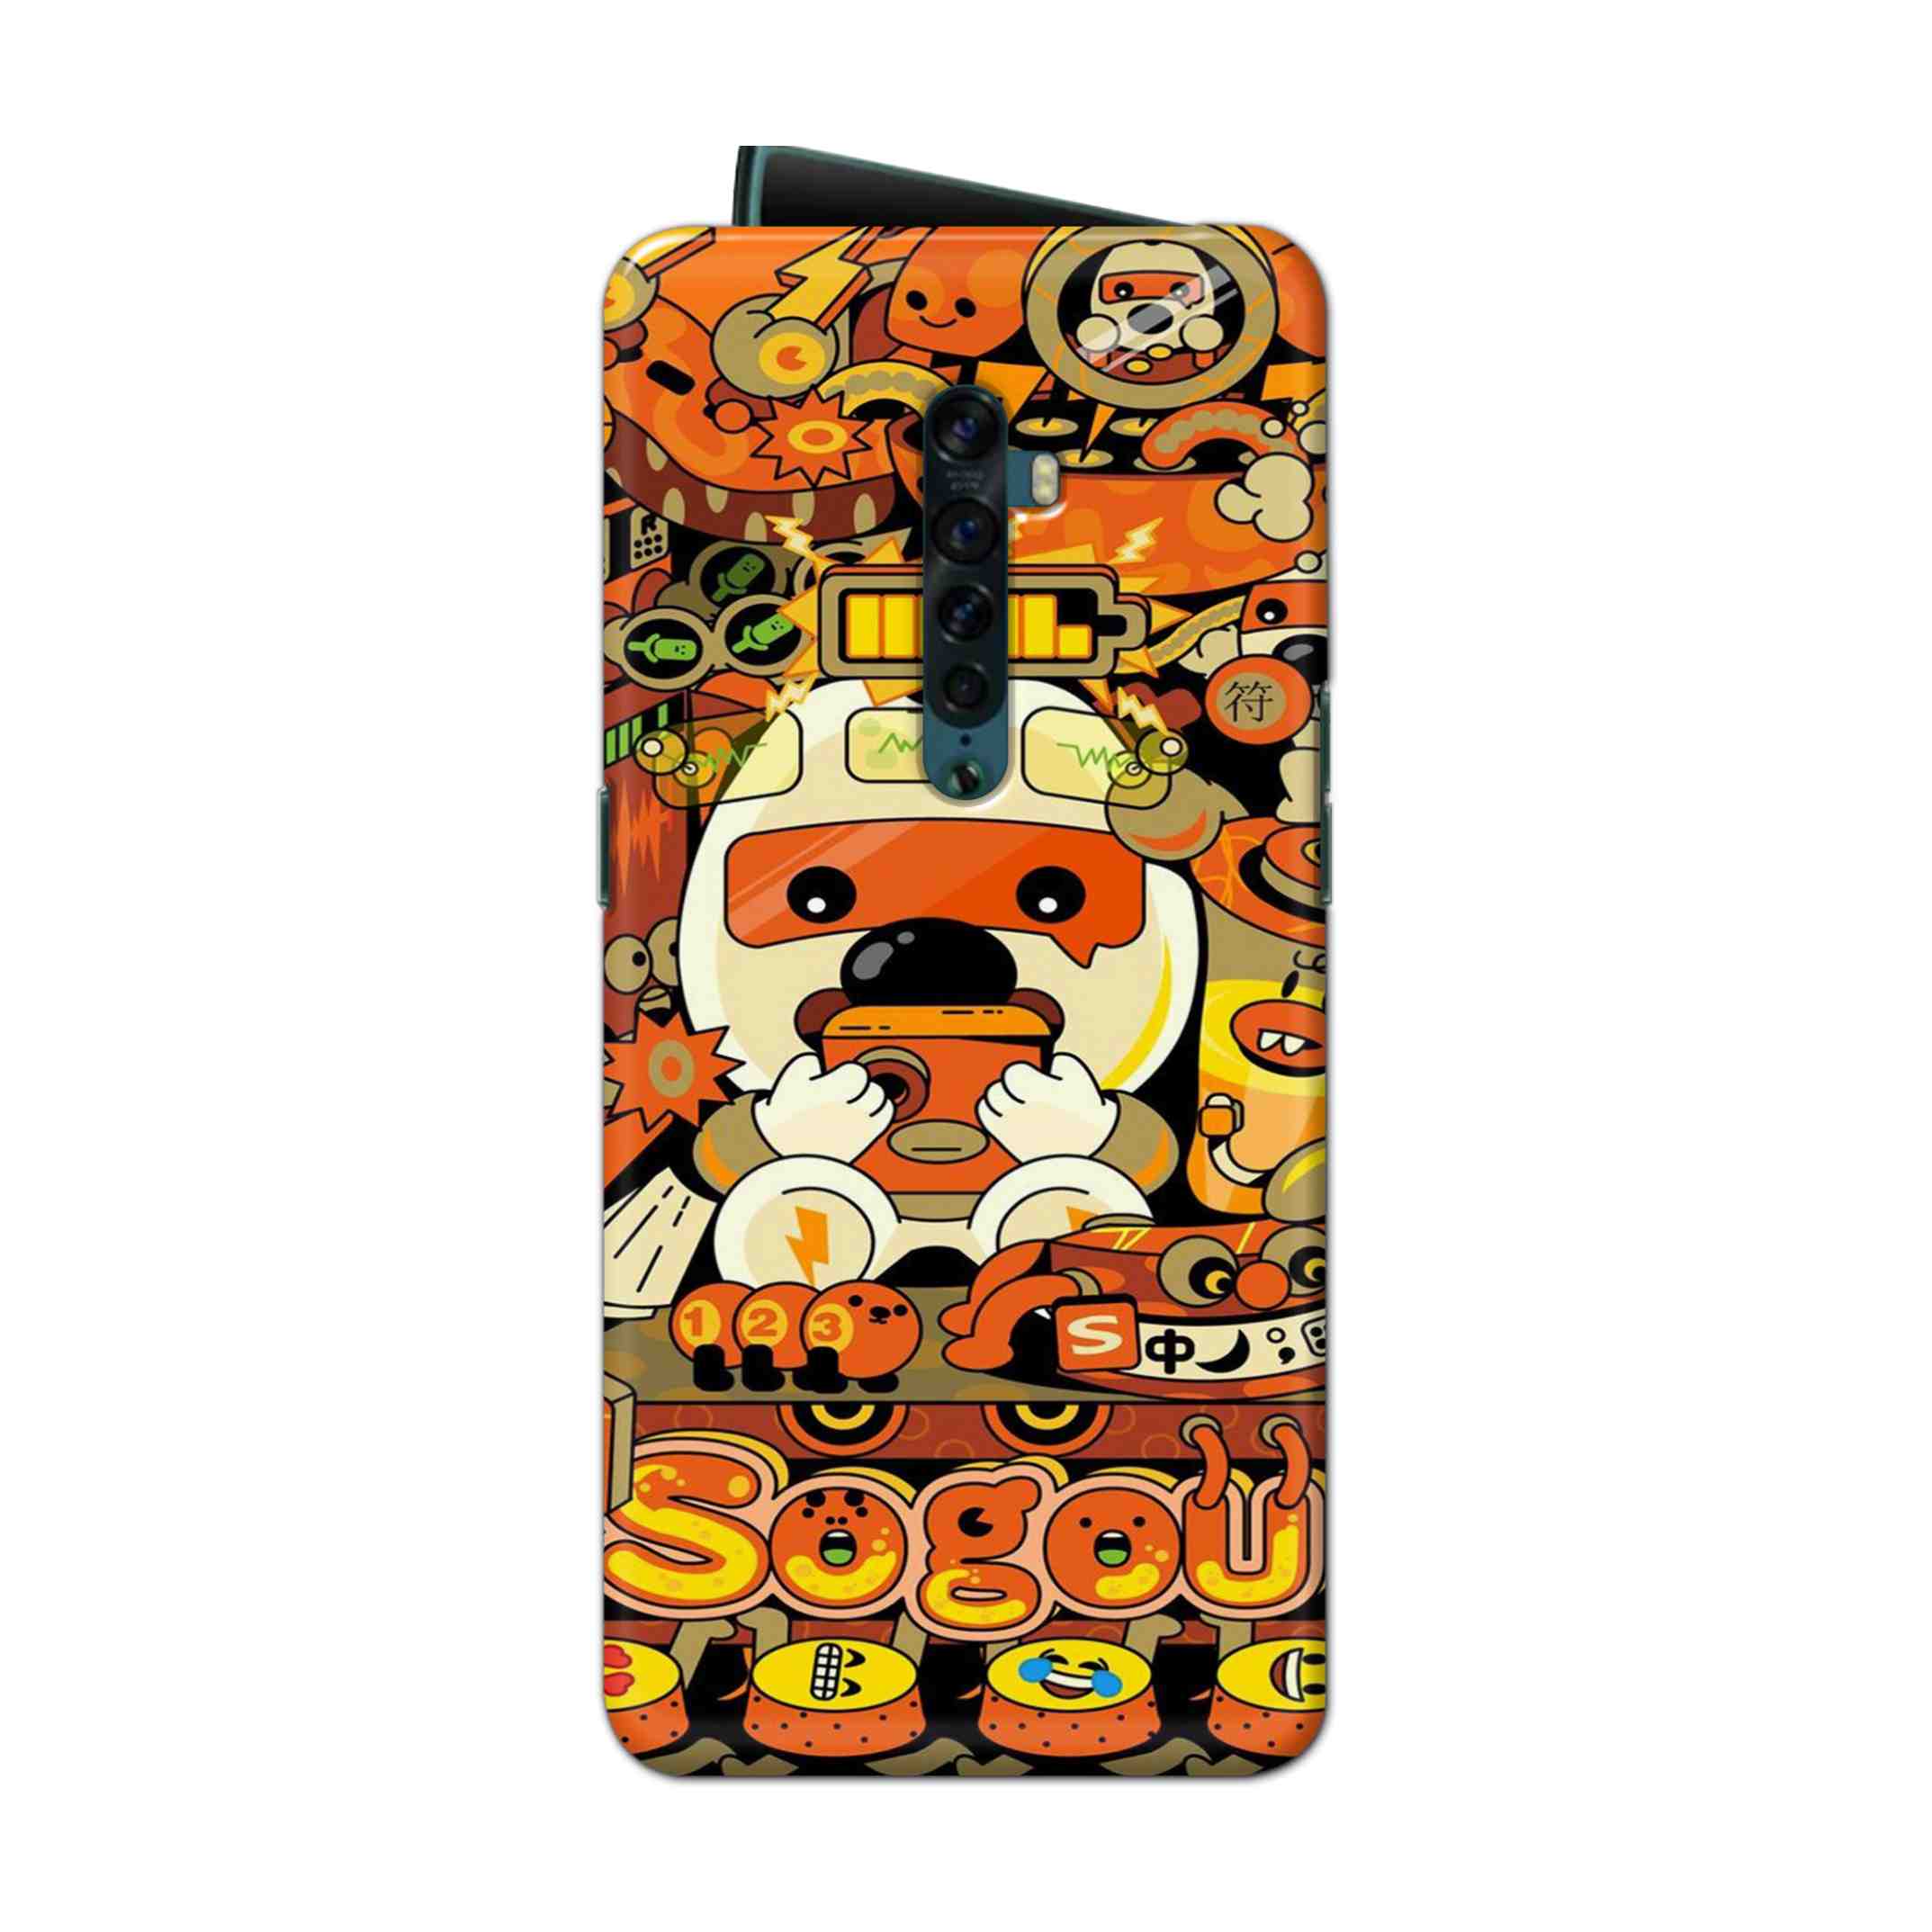 Buy Sogou Hard Back Mobile Phone Case Cover For Oppo Reno 2 Online